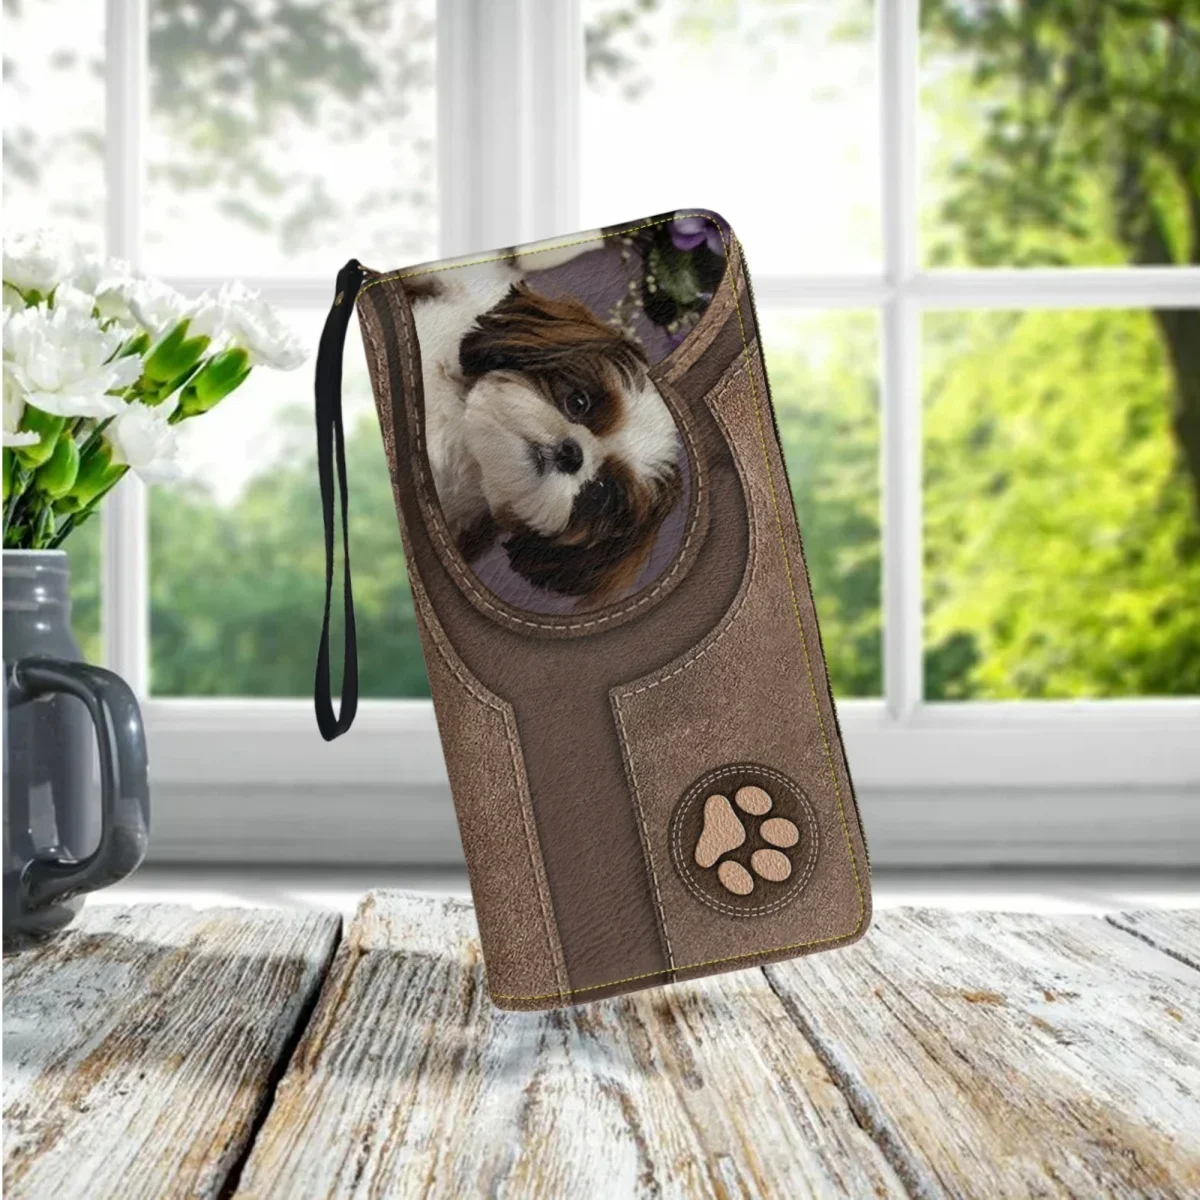 

Cute Funny Shih Tzu Maltese Dog Design Wallet Elegant Fashion Outgoing Leather Wrist Bag New Long Zipper Multifunction Wallet